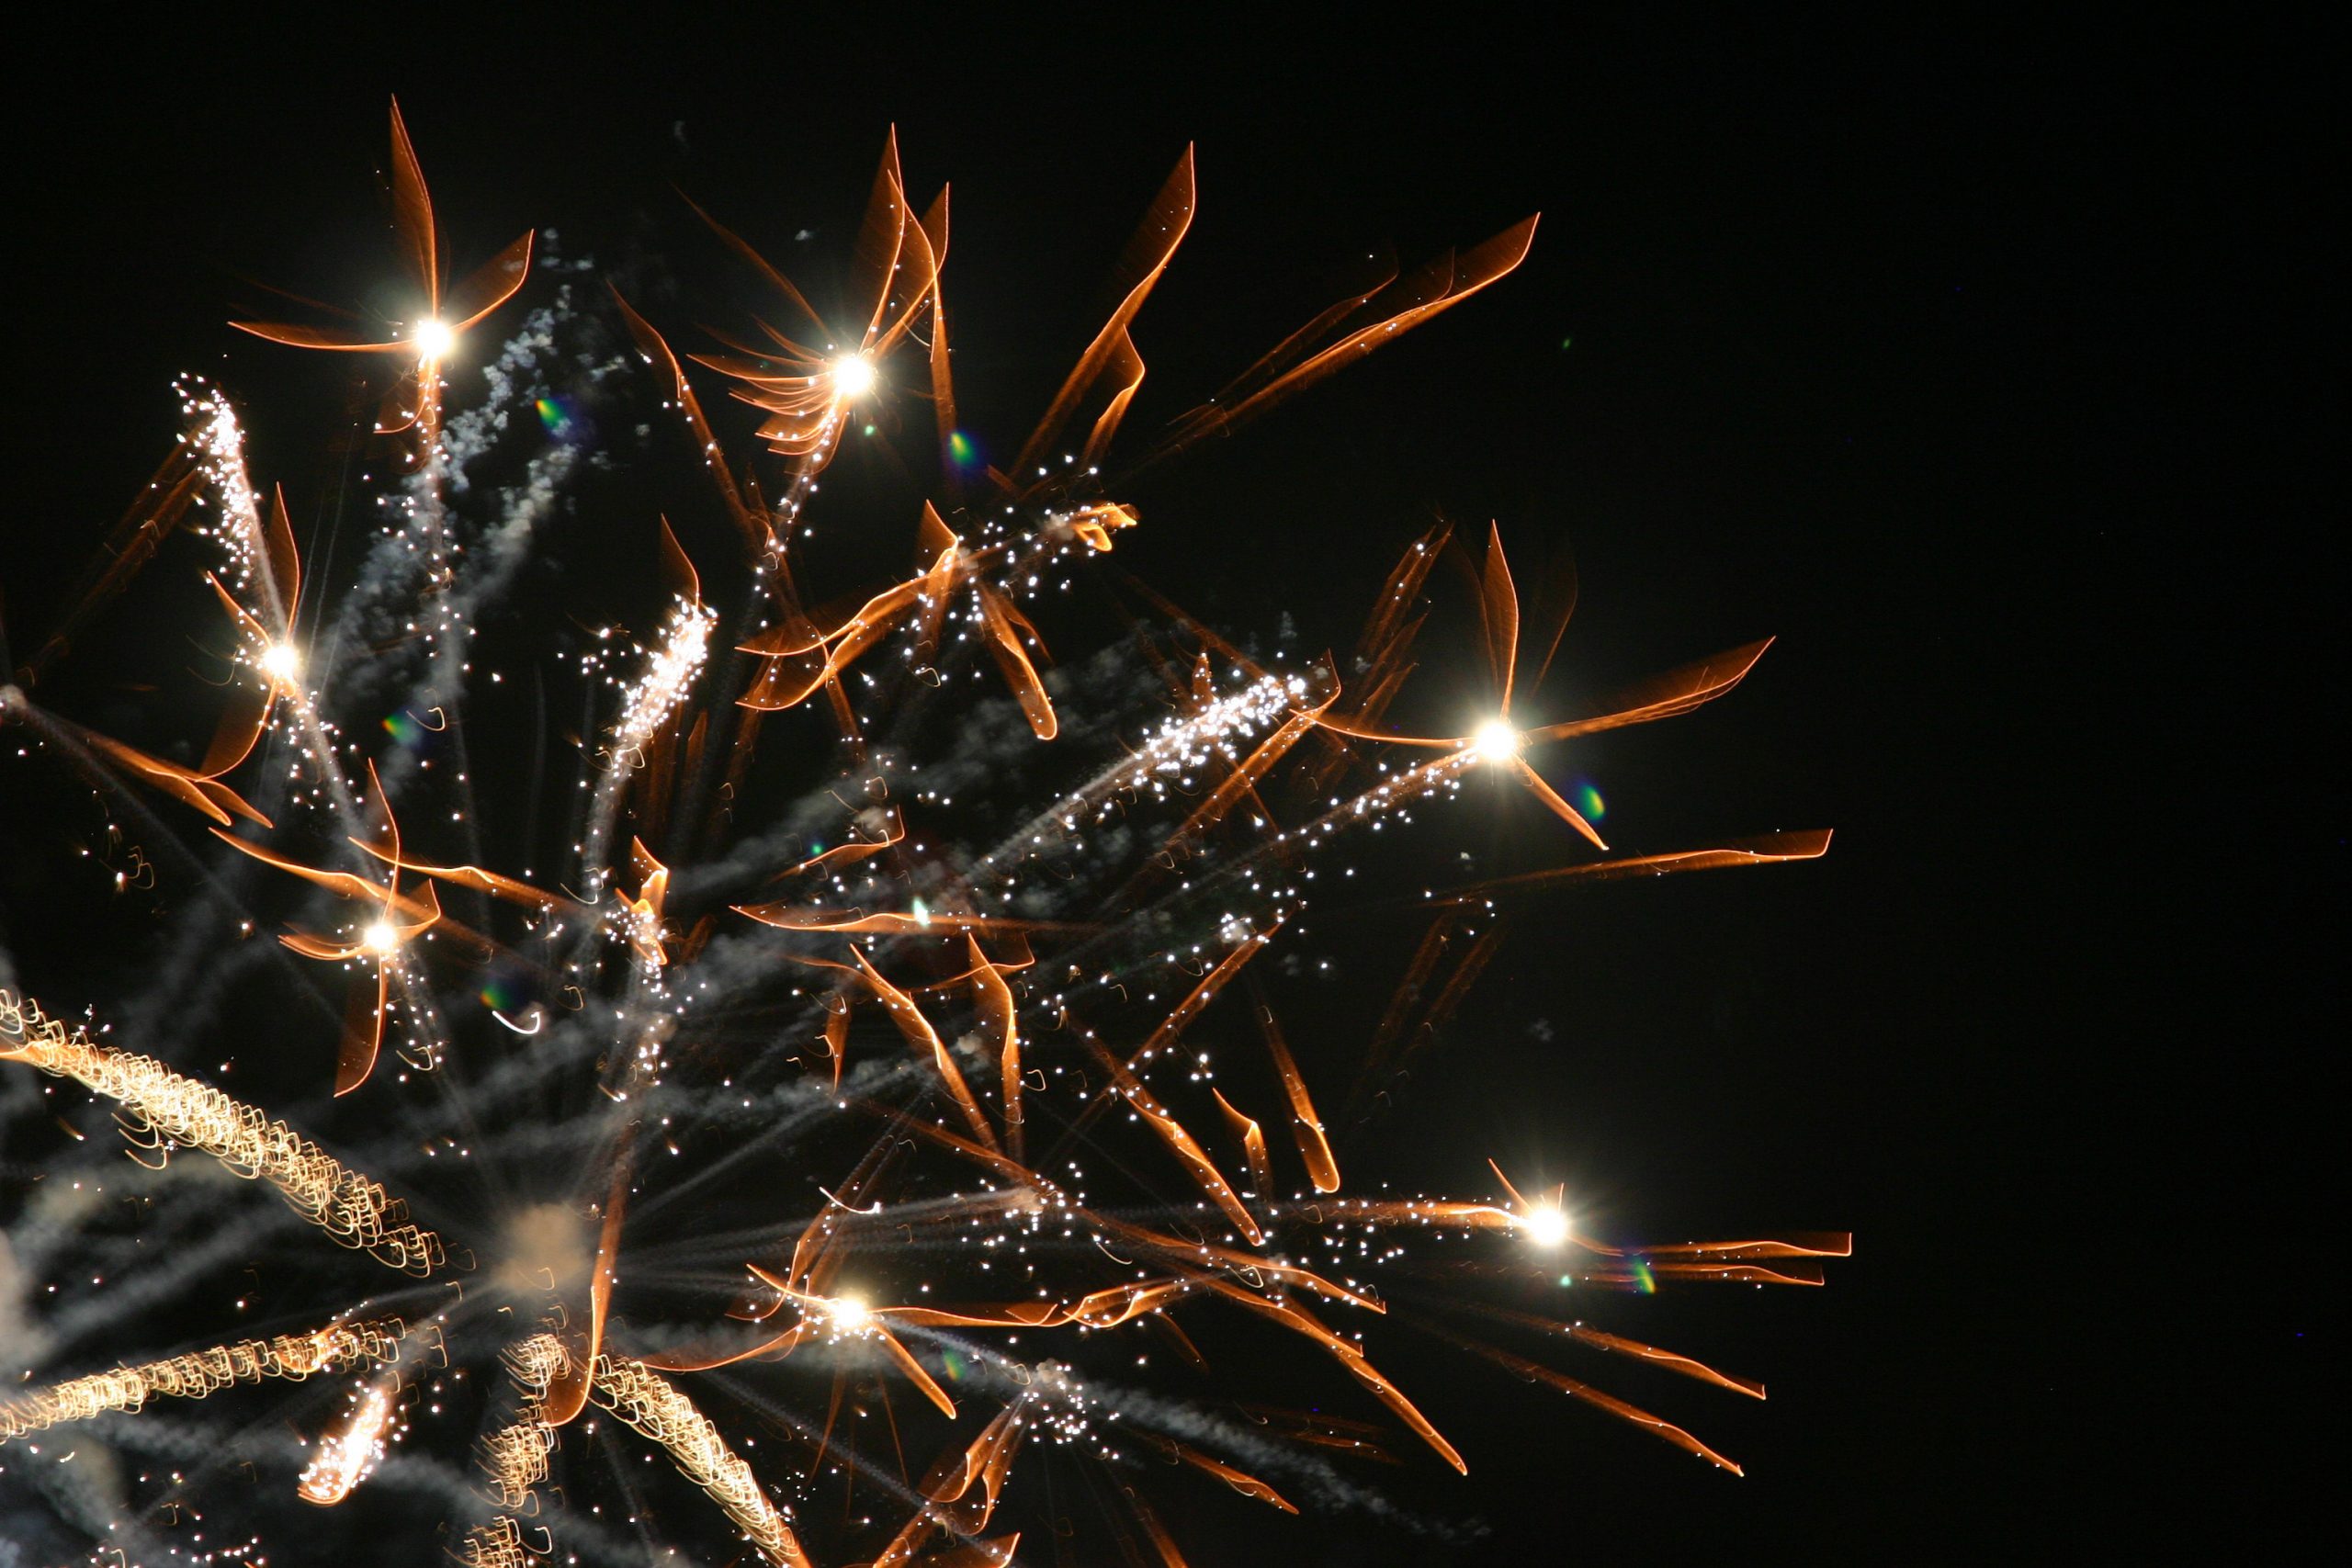 Jordan Kauffman's photo entitled "Alien Fireworks"